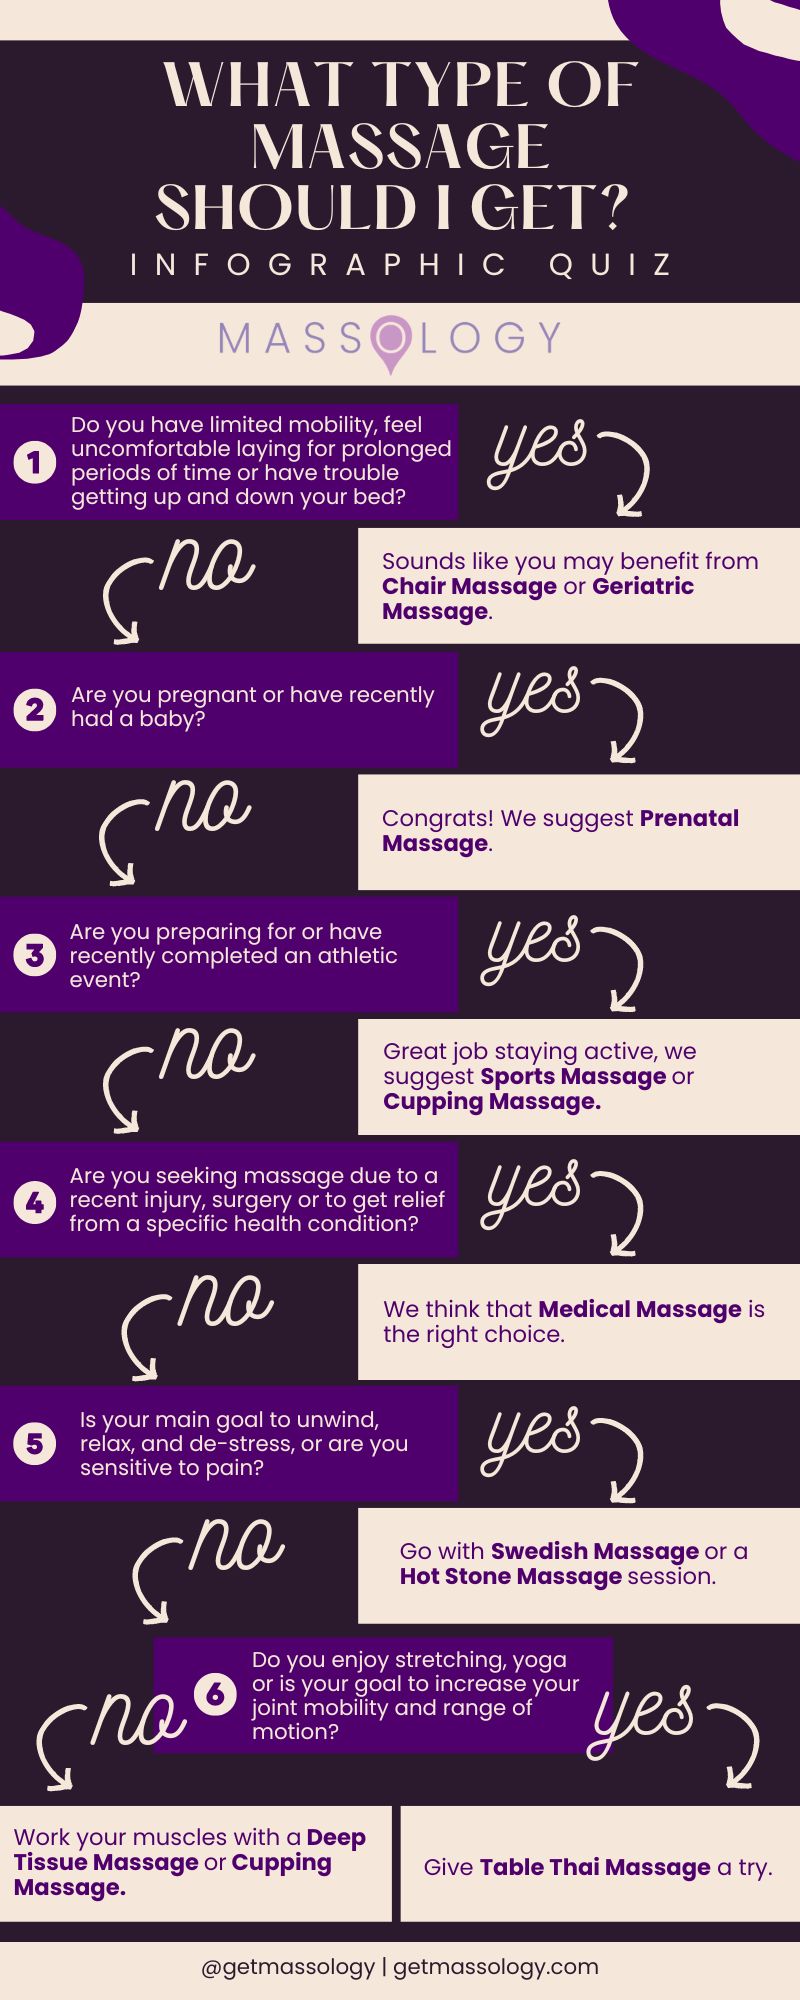 https://getmassology.com/journal/wp-content/uploads/2023/02/What-type-of-massage-should-i-get-infographic.jpg